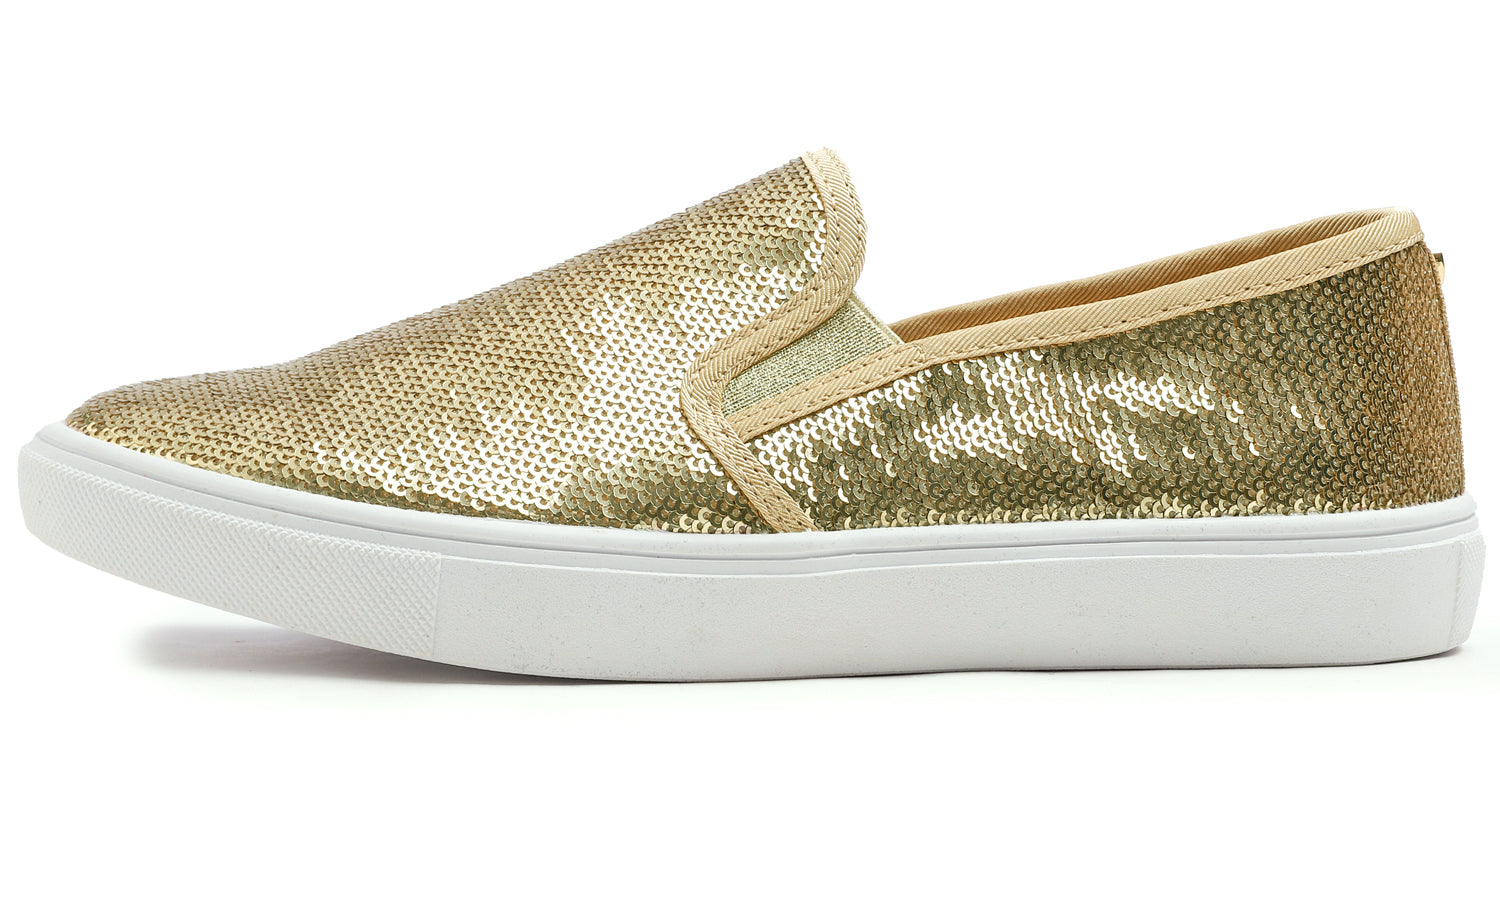 Feversole Women's Gold Sequin Slip On Sneaker Casual Flat Loafers